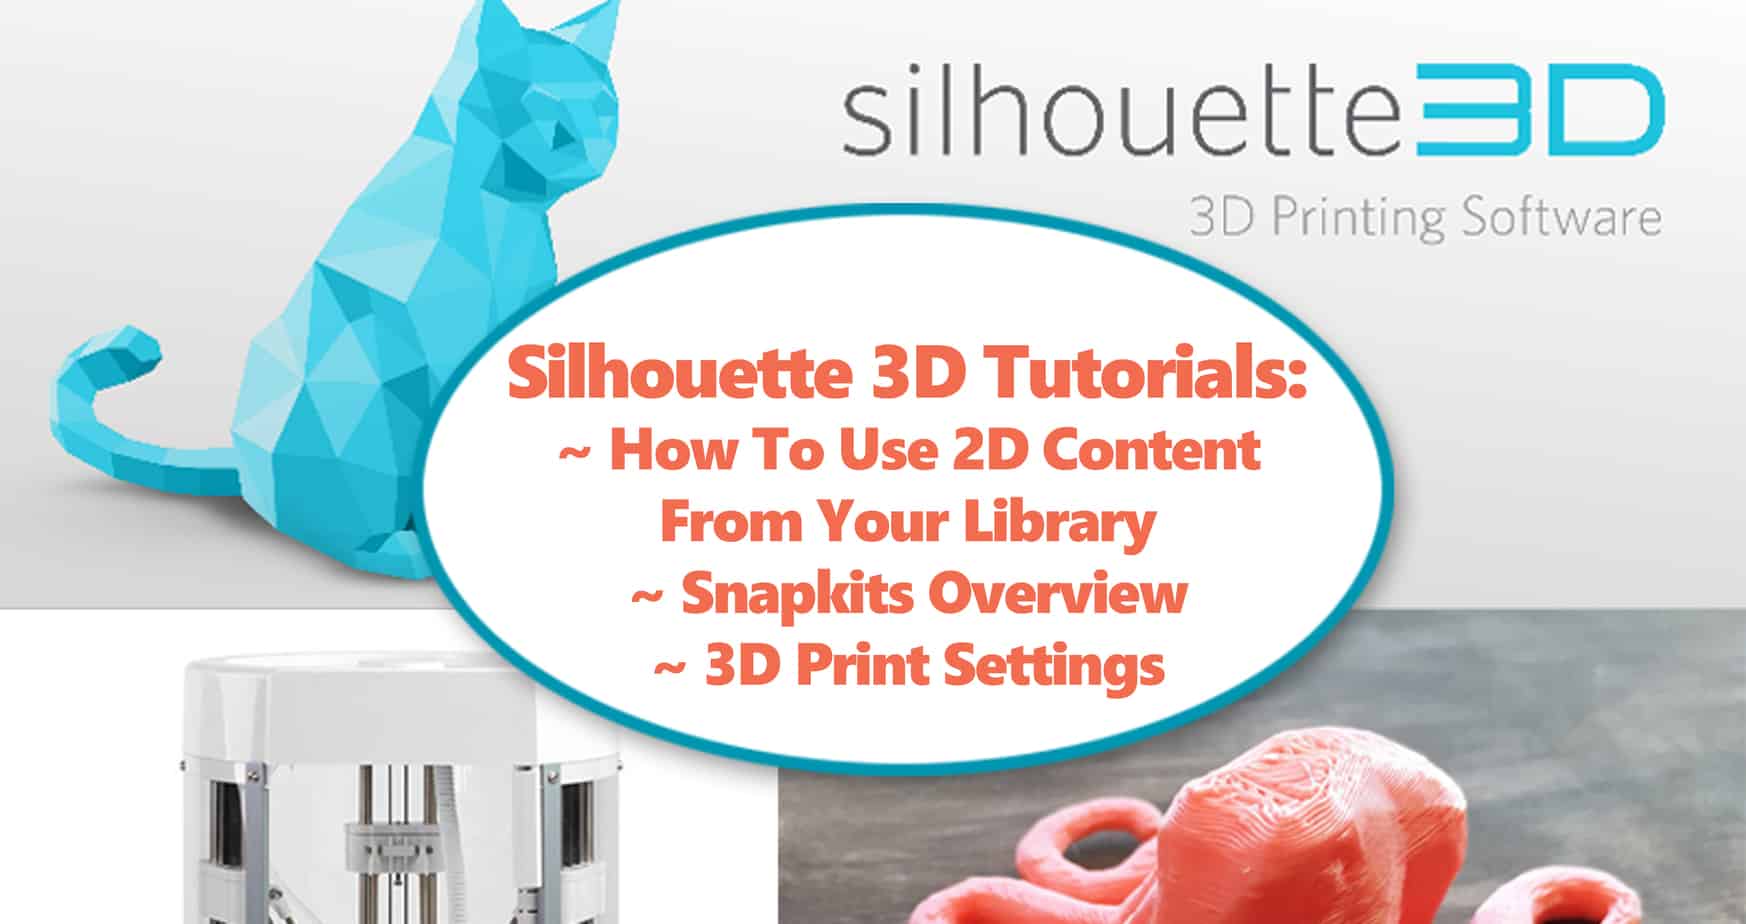 Silhouette 3D Software Tutorials